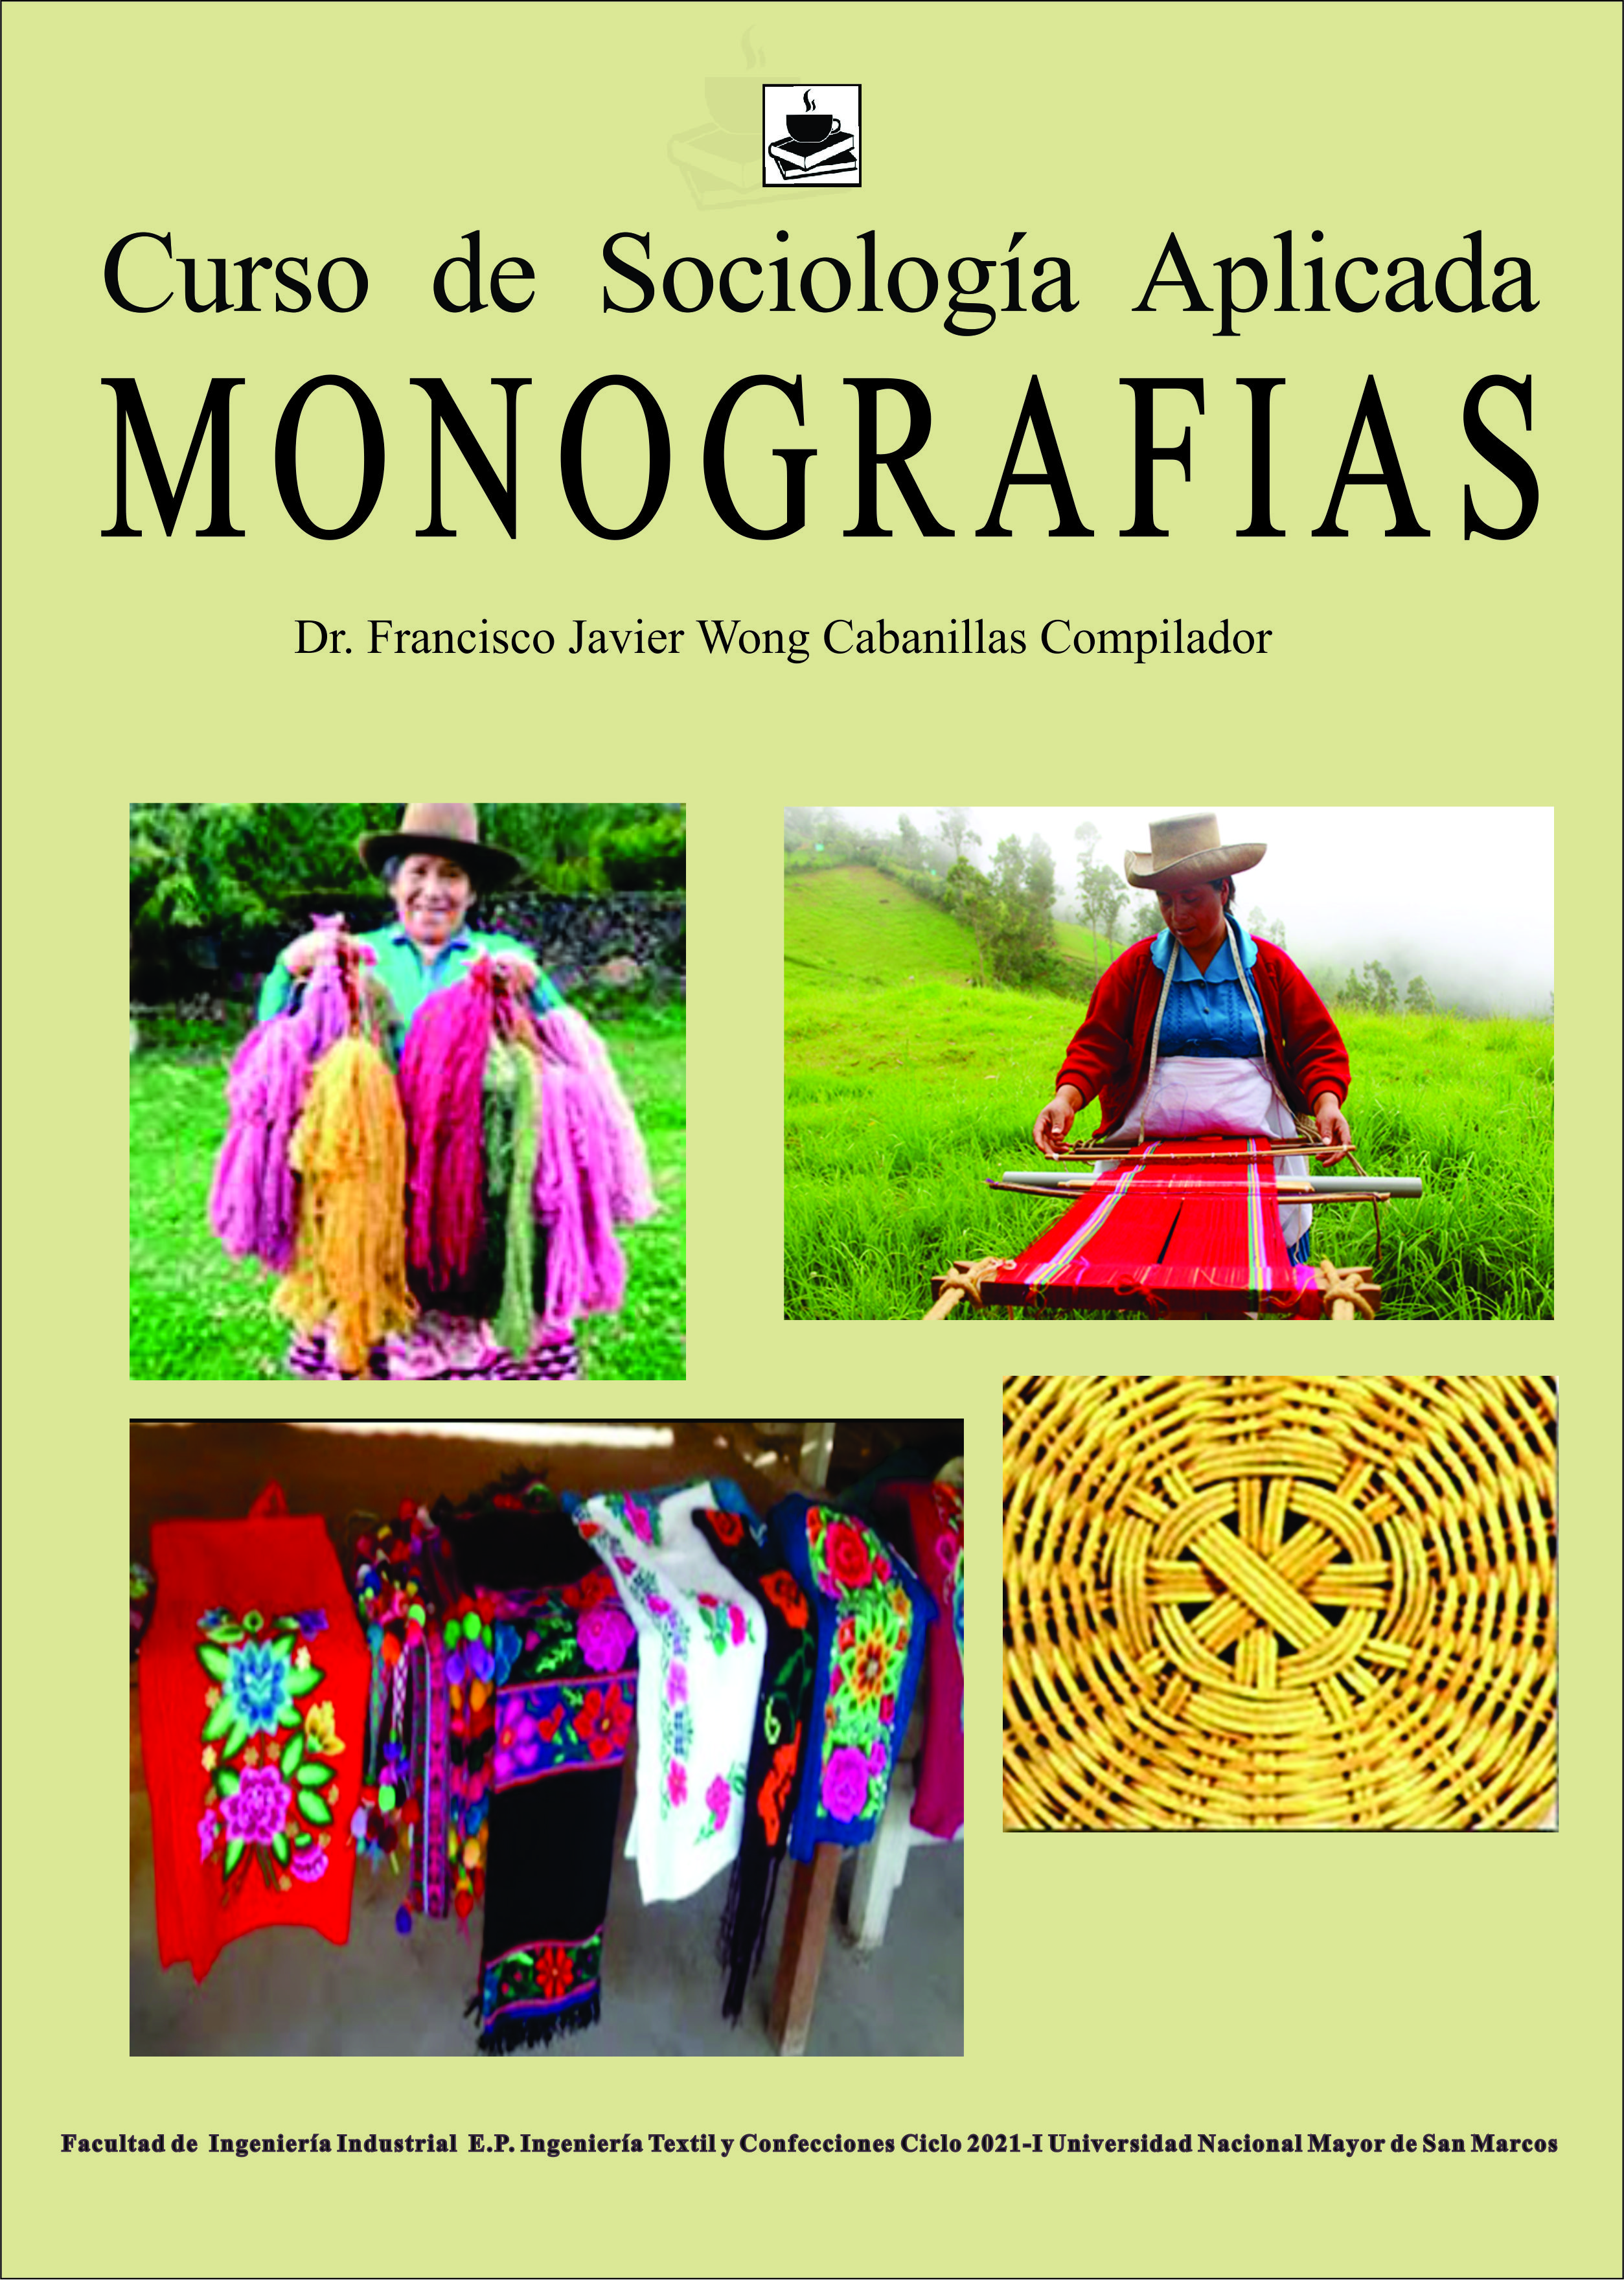 modelo_caratula_monografias_2021_1.jpg